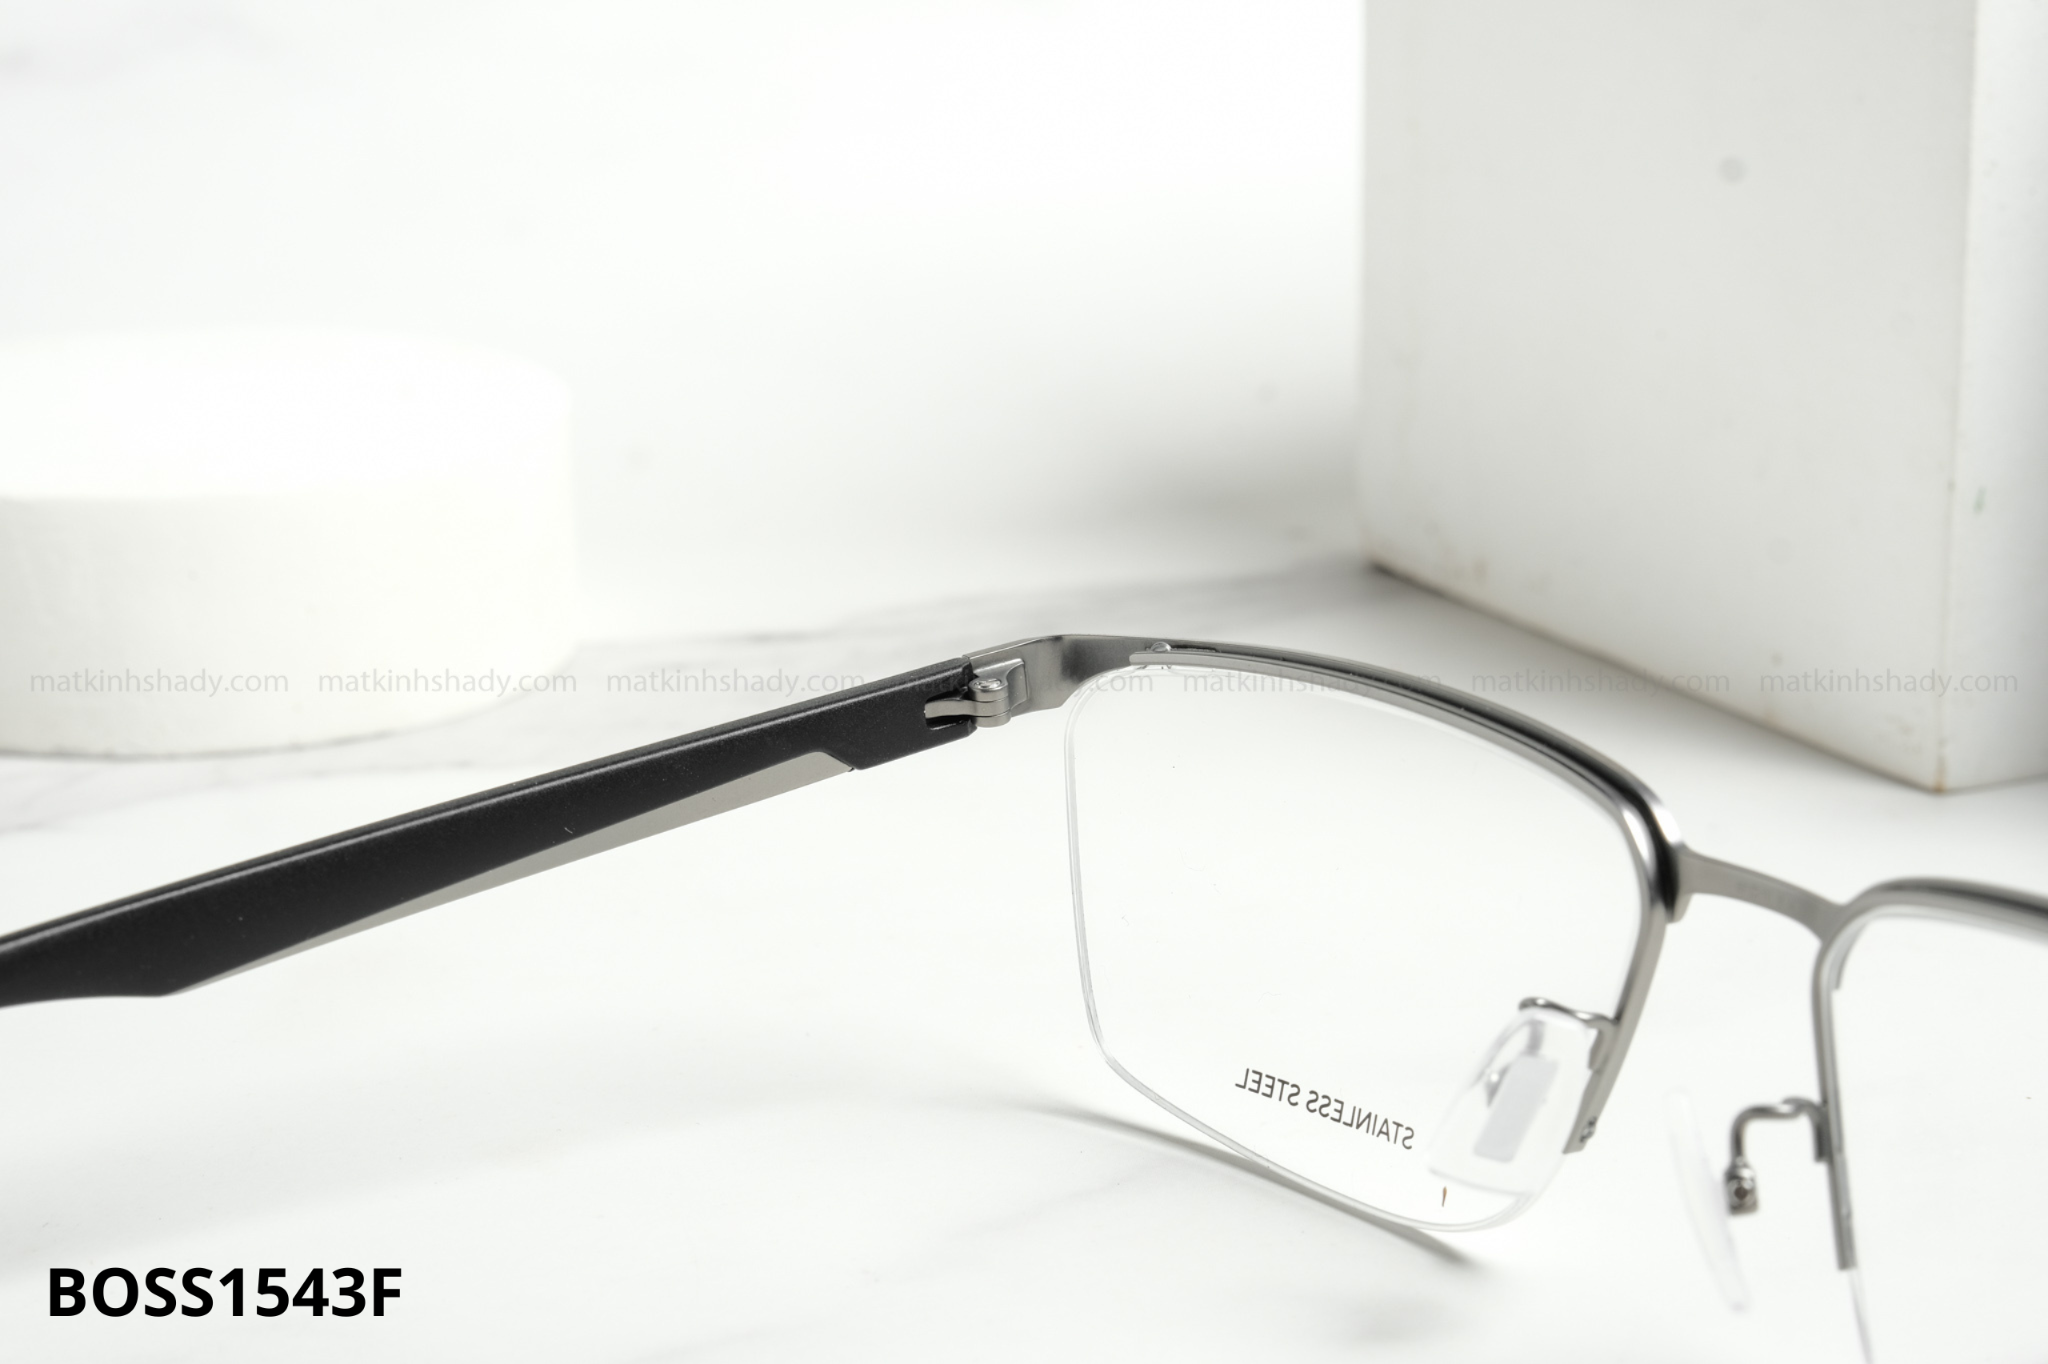  Boss Eyewear - Glasses - Boss1543F 